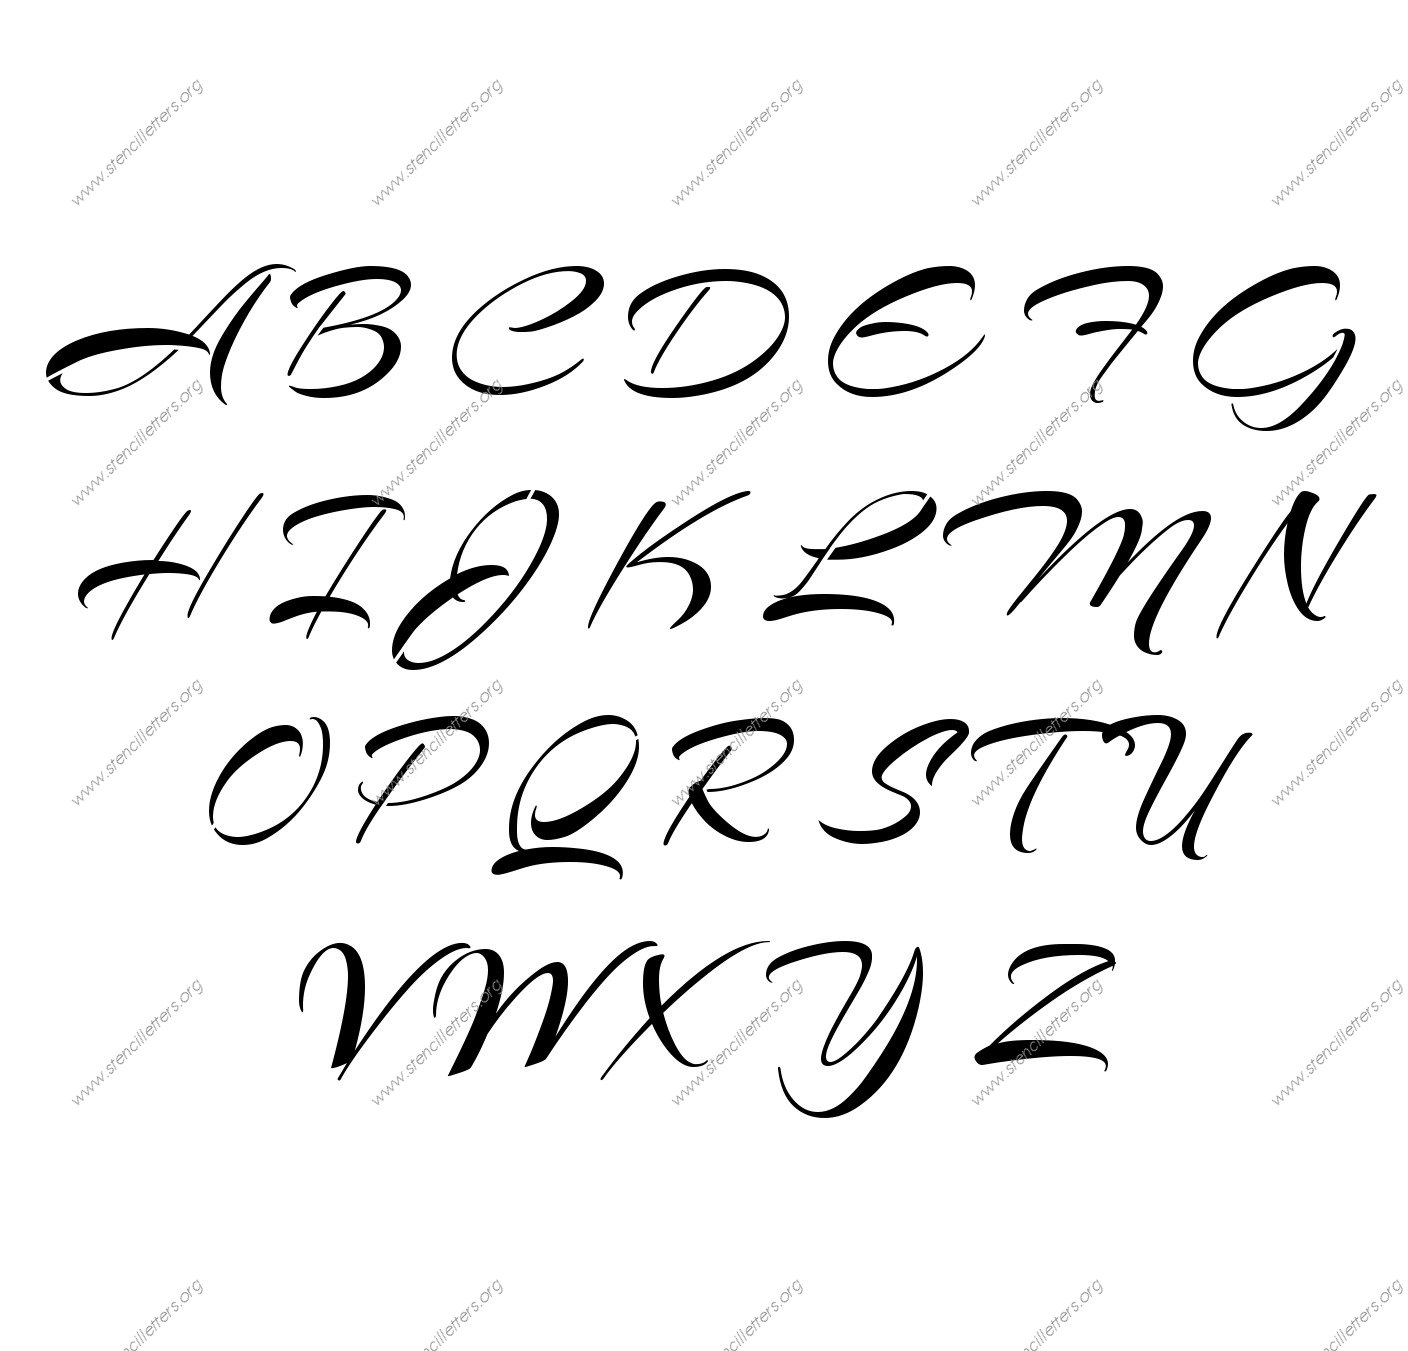 Brushed Cursive A to Z alphabet stencils